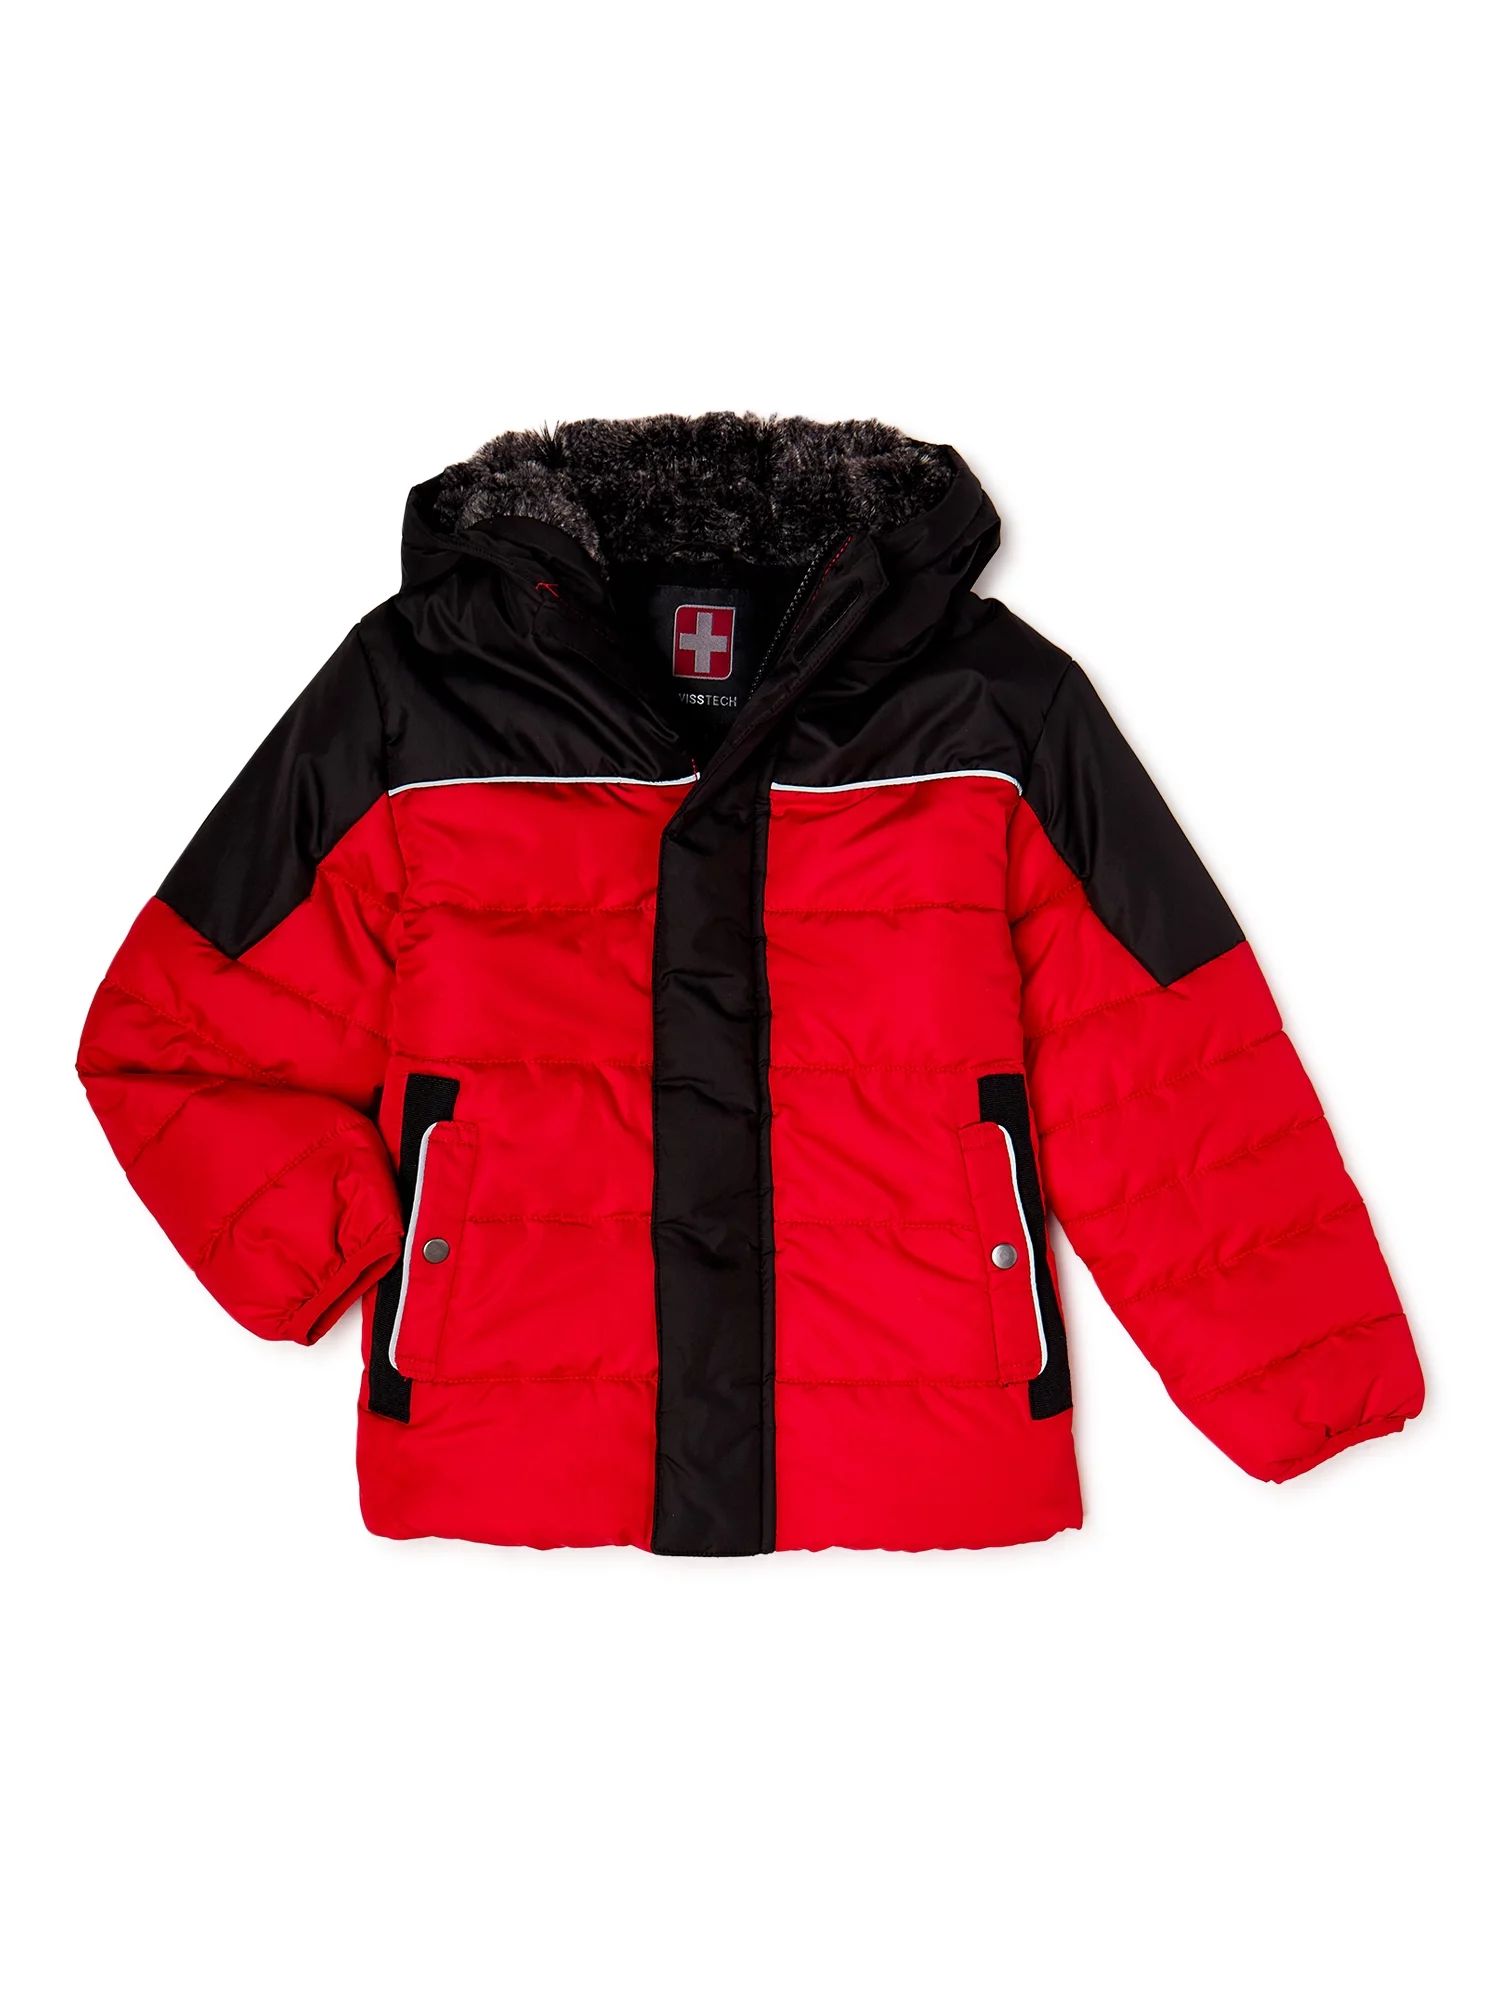 Swiss Tech Boys Winter Puffer Jacket with Hood, Sizes 4-18 | Walmart (US)